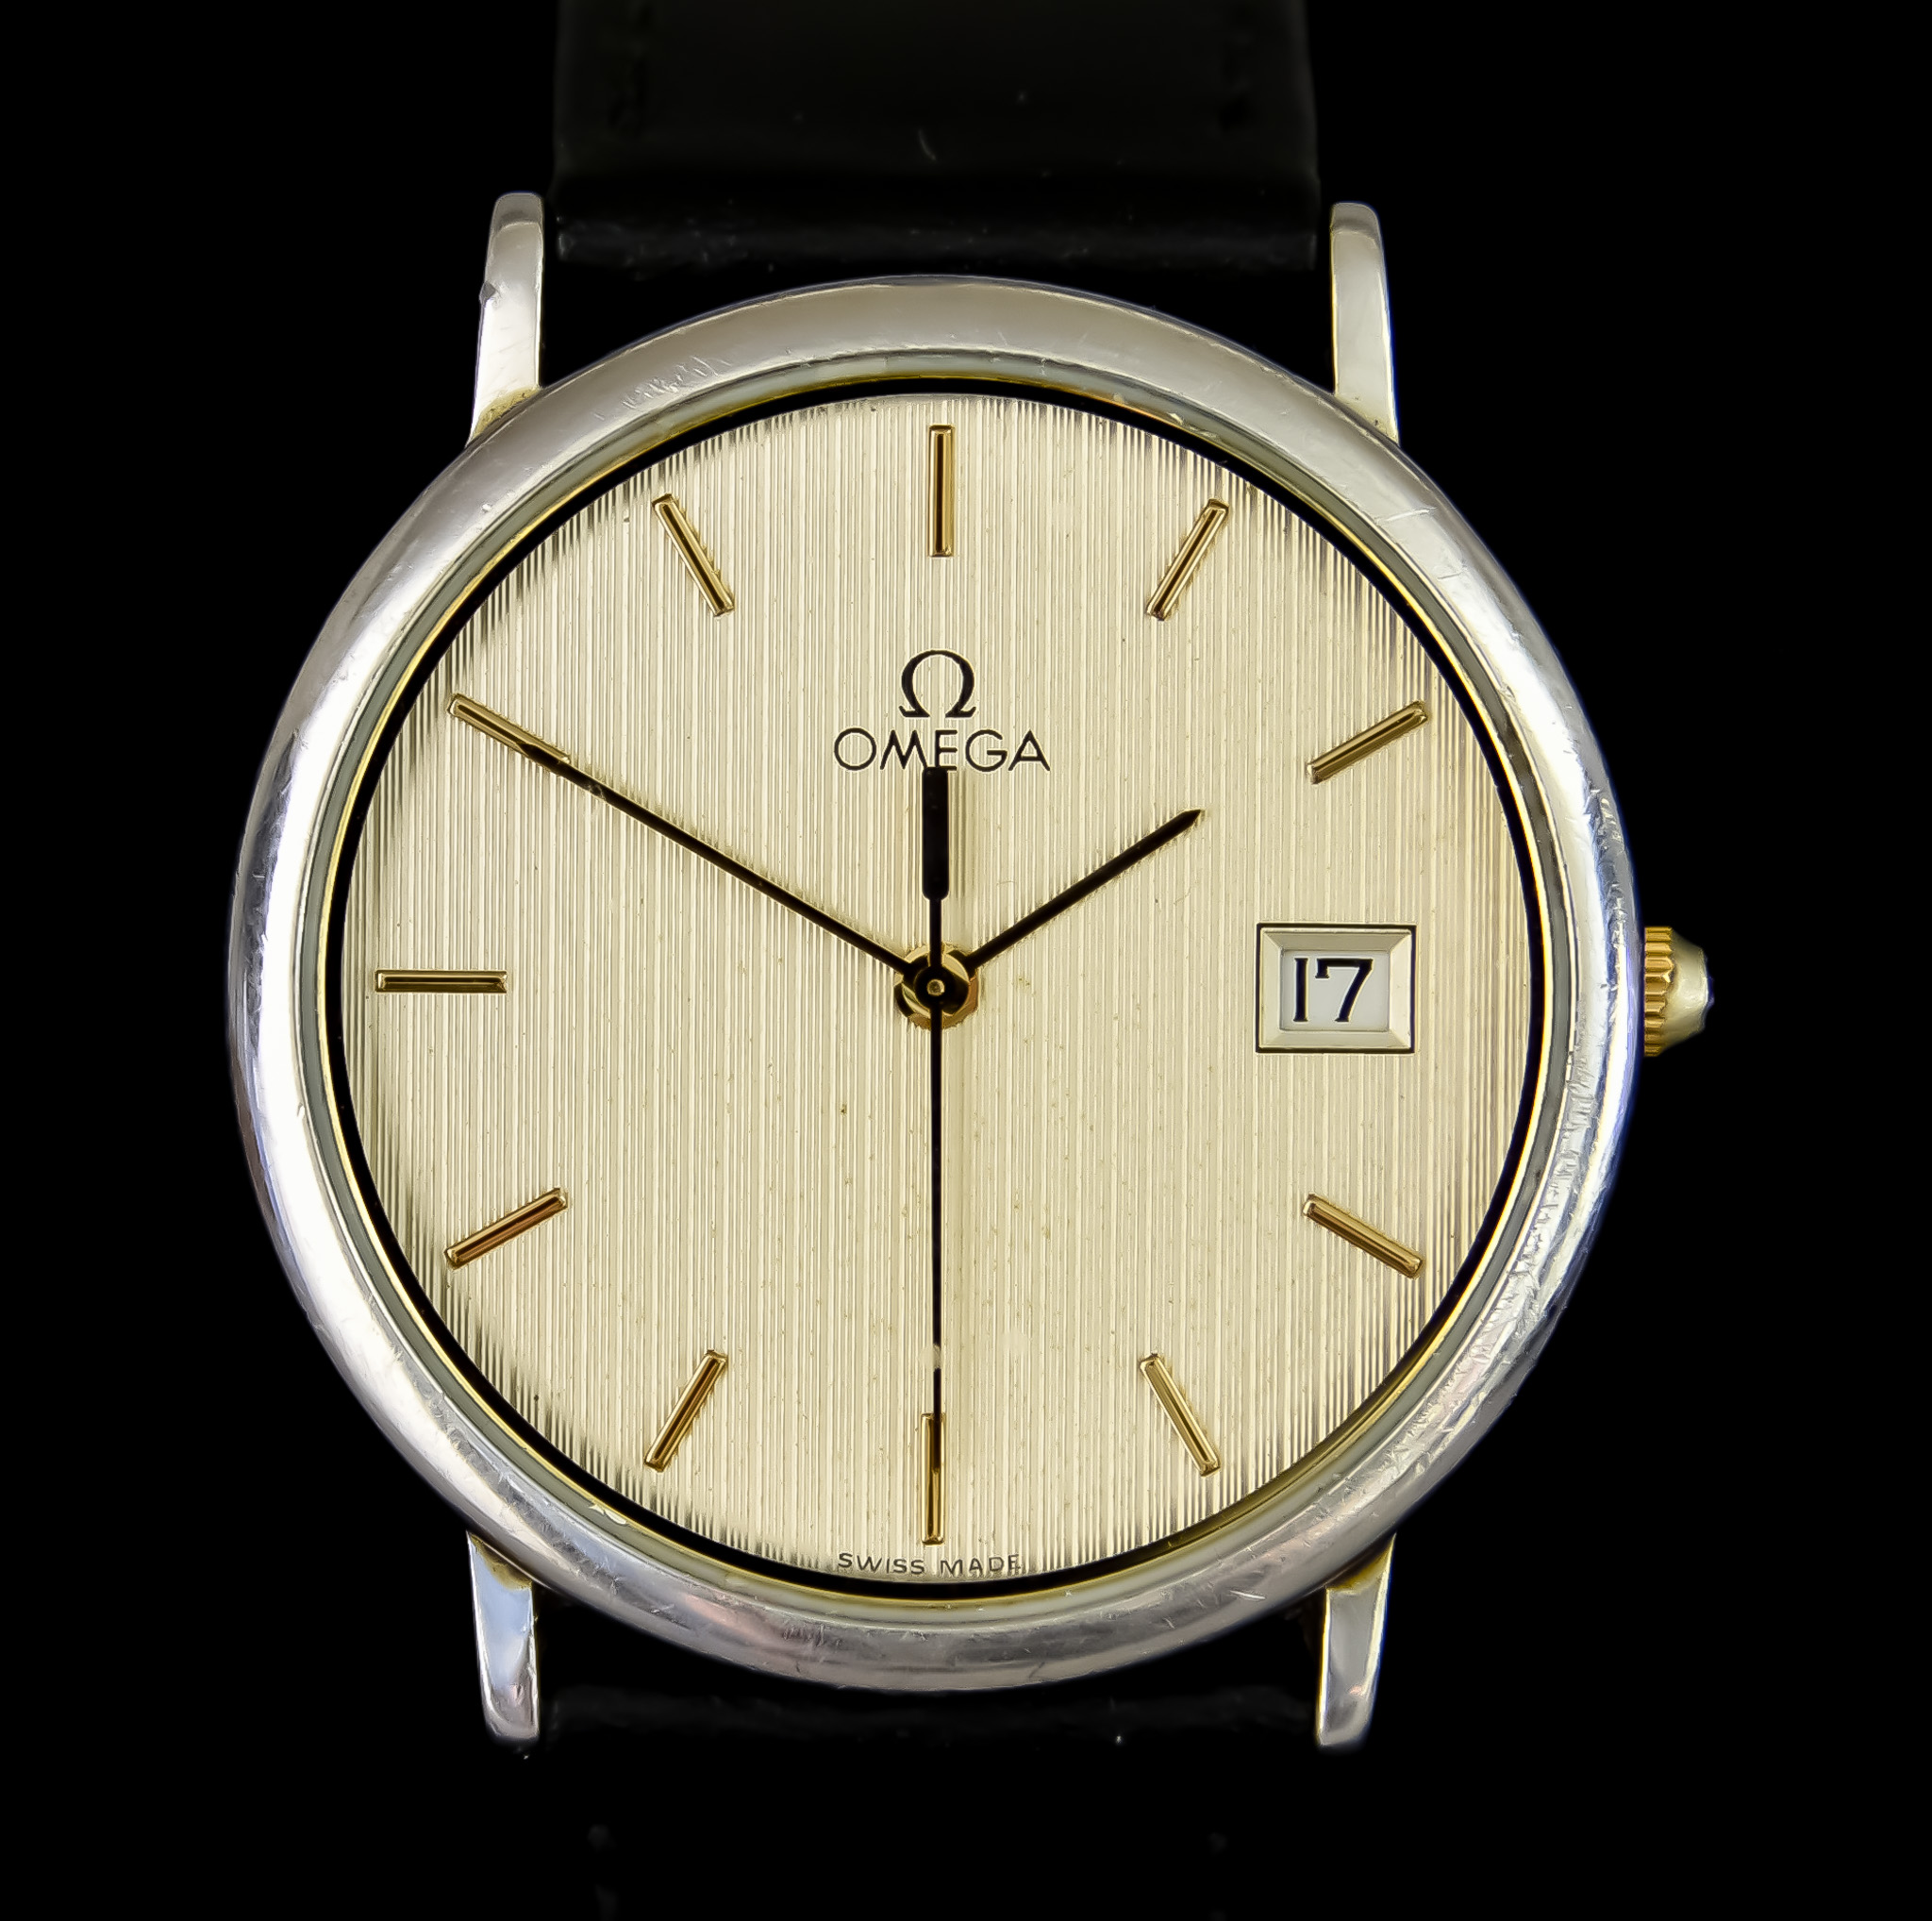 A Gentleman's Quartz Wristwatch by Omega, model De Ville, white metal case, 33mm diameter, champagne